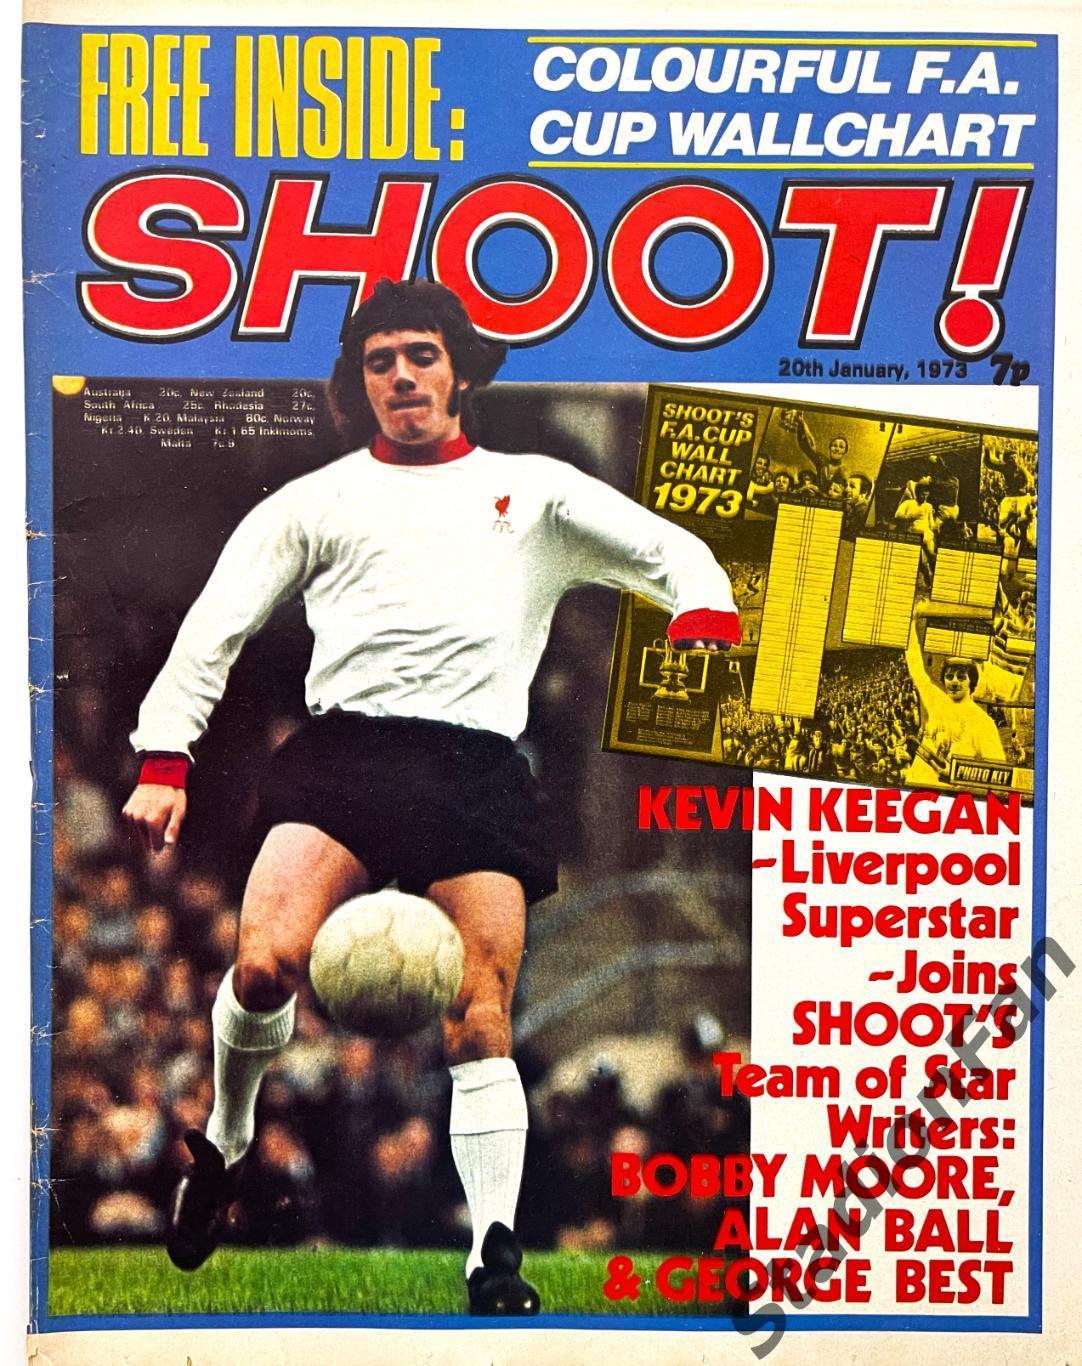 Журнал SHOOT! - 1973 год, от 20 января.